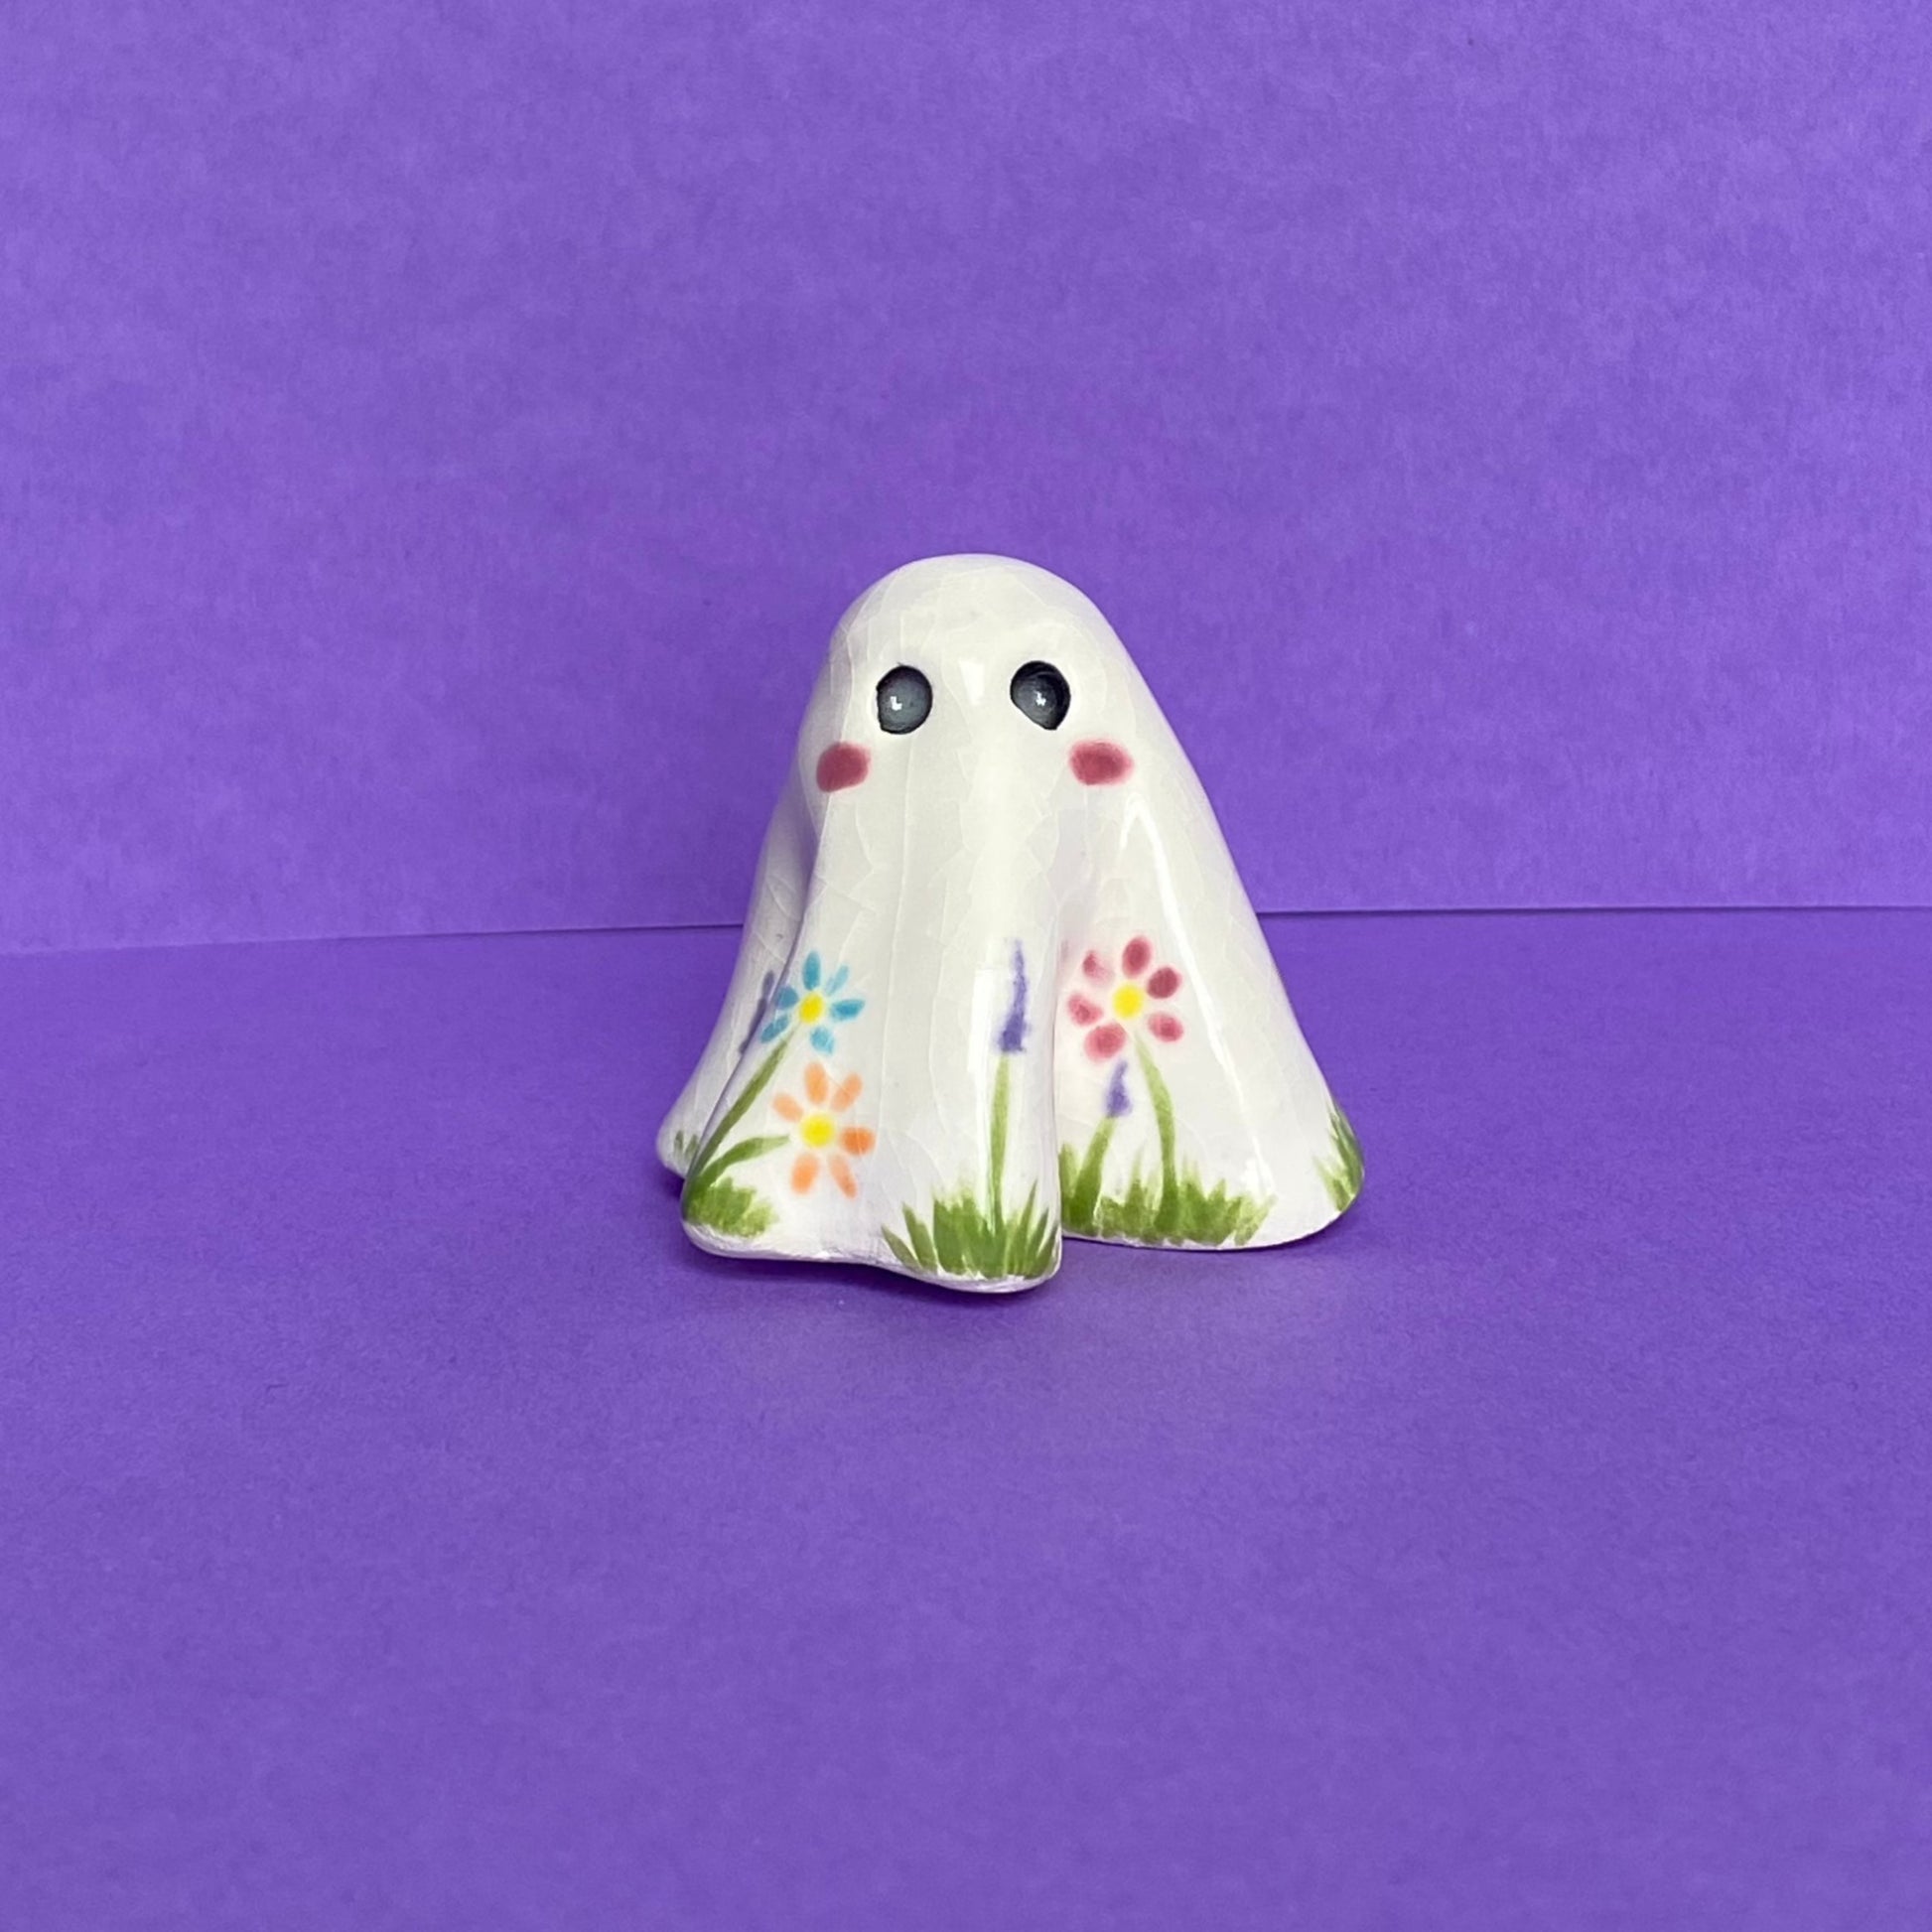 Talila - Handmade Floral Ghost Figurine Politely Declining